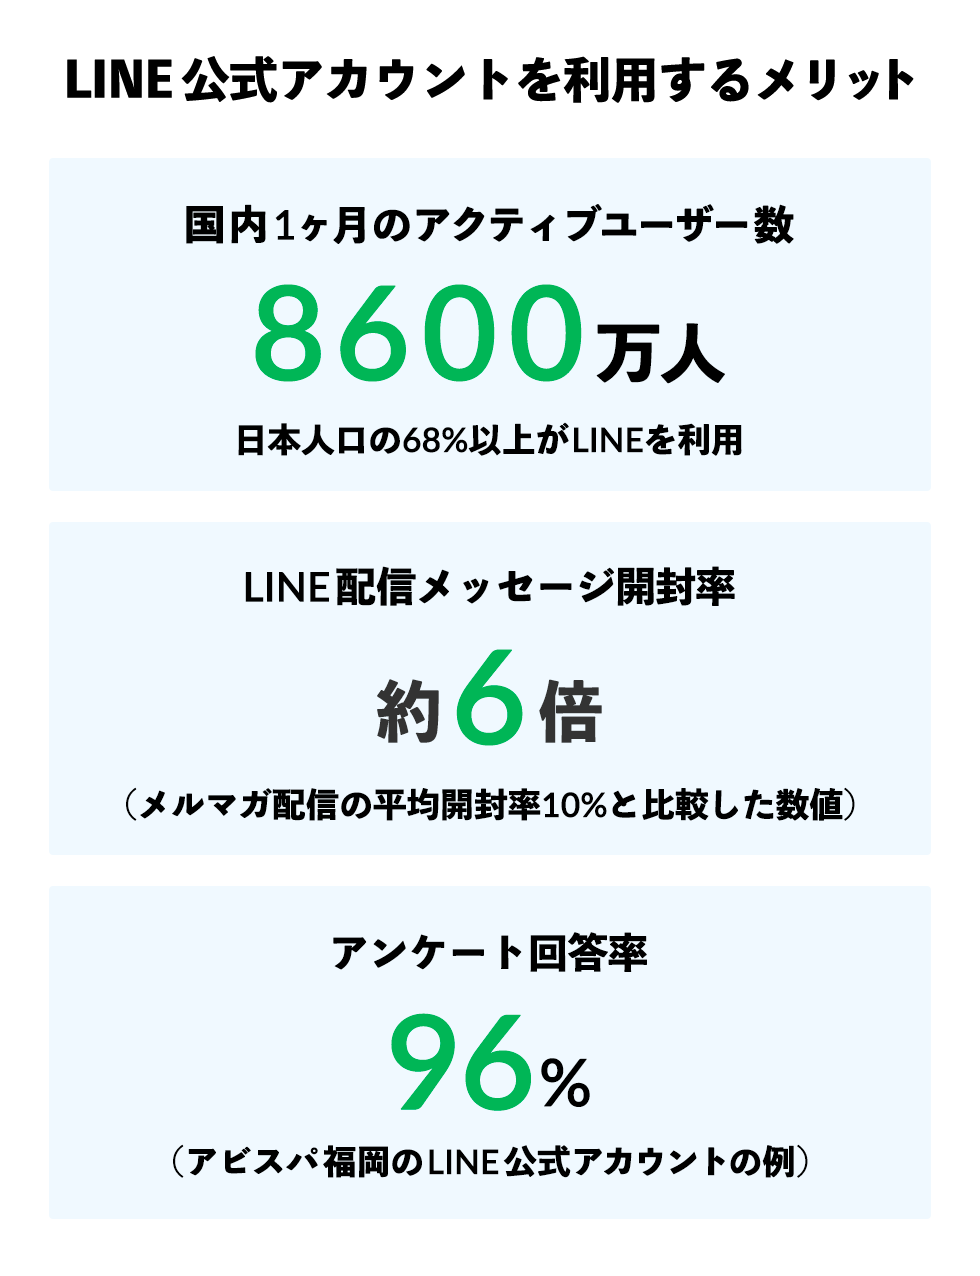 LINE公式アカウントを利用するメリットは、「国内1ヶ月のアクティブユーザー数8600万人（日本人口の68%以上がLINEを利用）」「LINE配信メッセージ開封率約6倍（メルマガ配信の平均開封率10%と比較した数値）」「アンケート回答率96%（アビスパ福岡のLINE公式アカウントの例）」です。